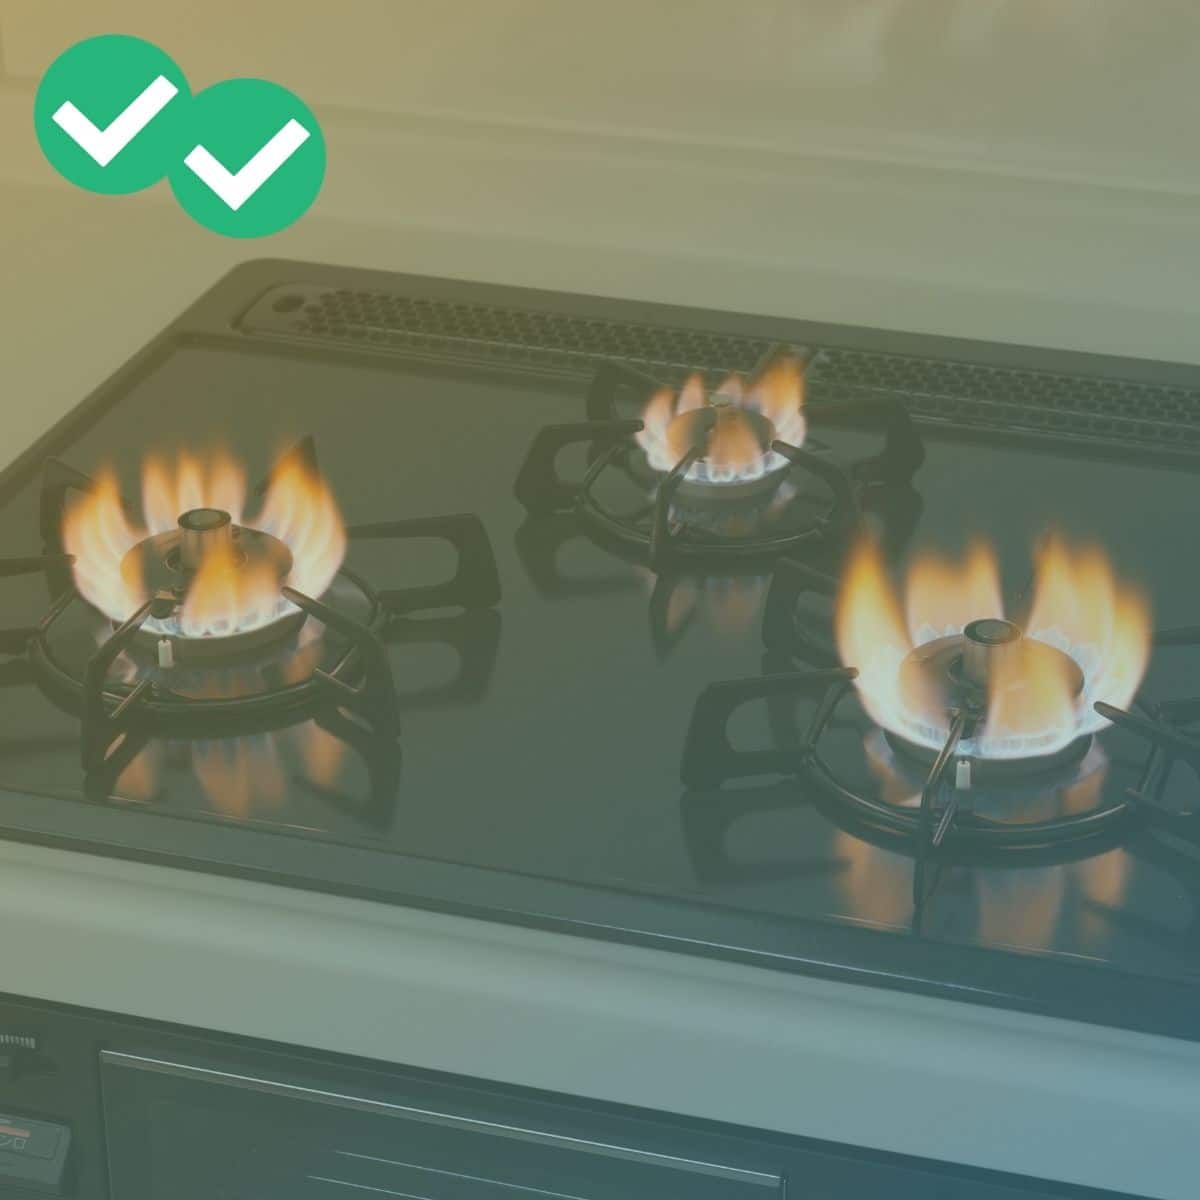 Gas burning on stove